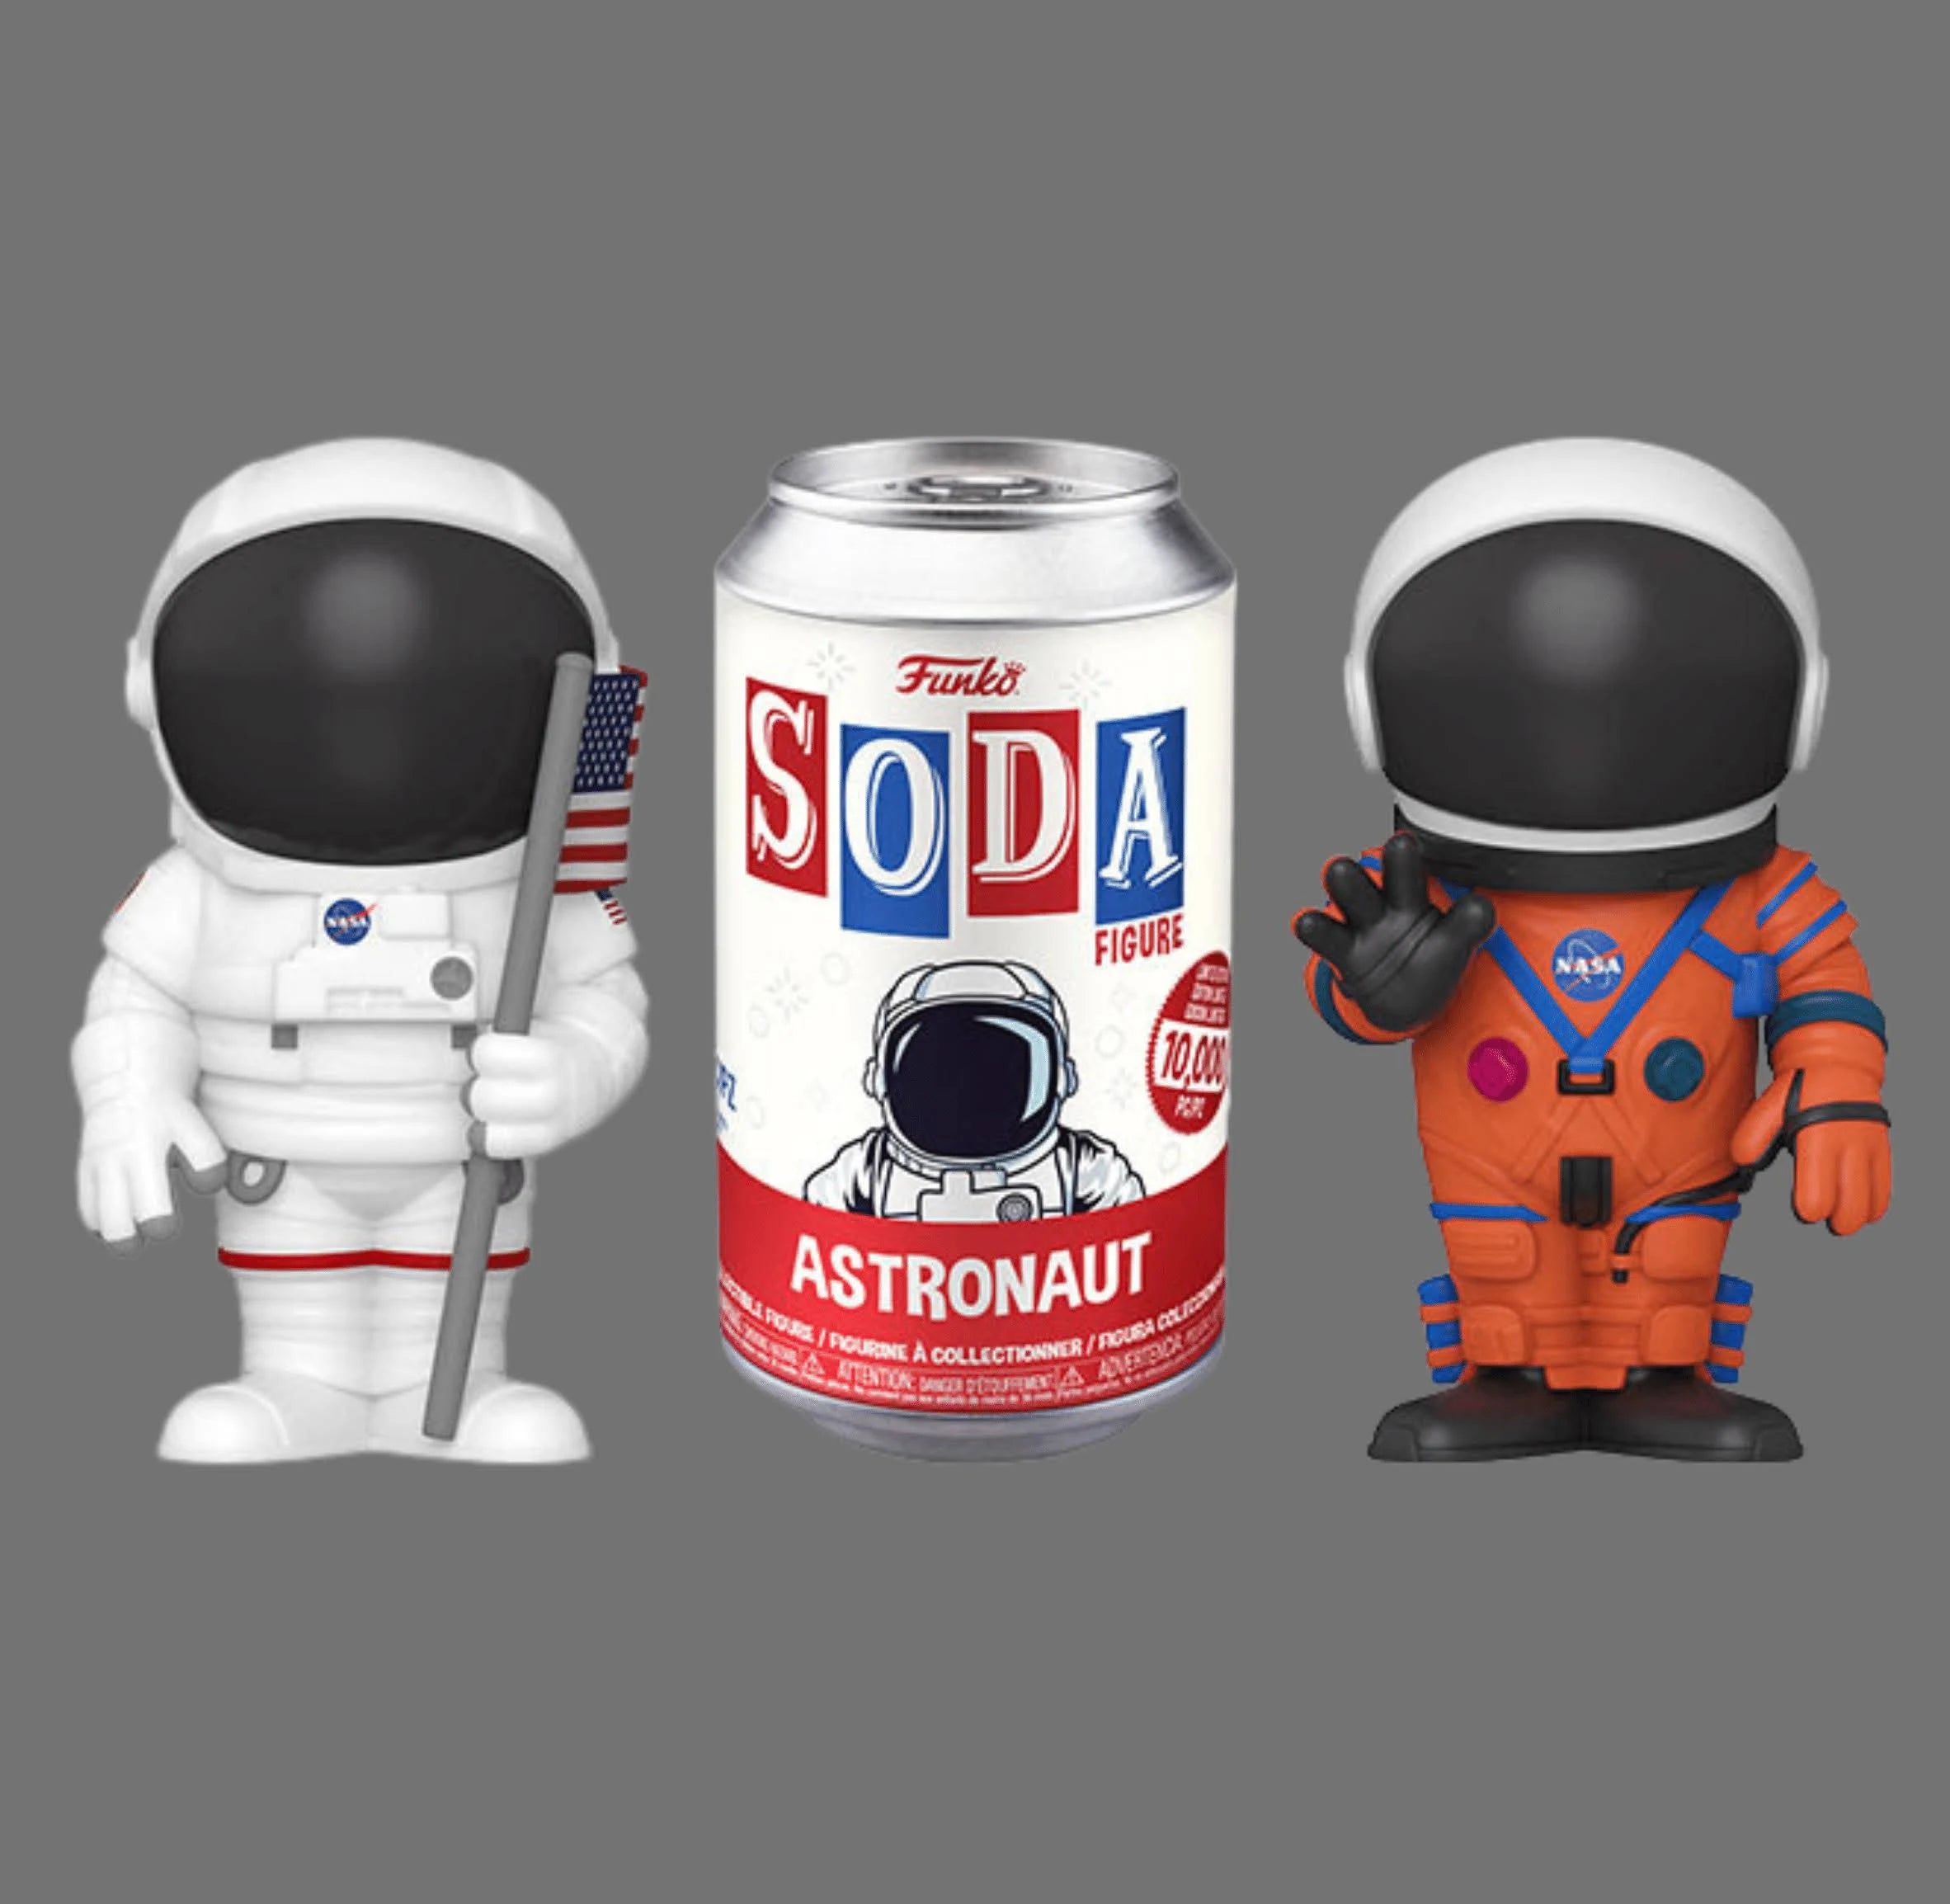 Funko NASA Astronaut Vinyl Soda Figure Limited Edition of 10K